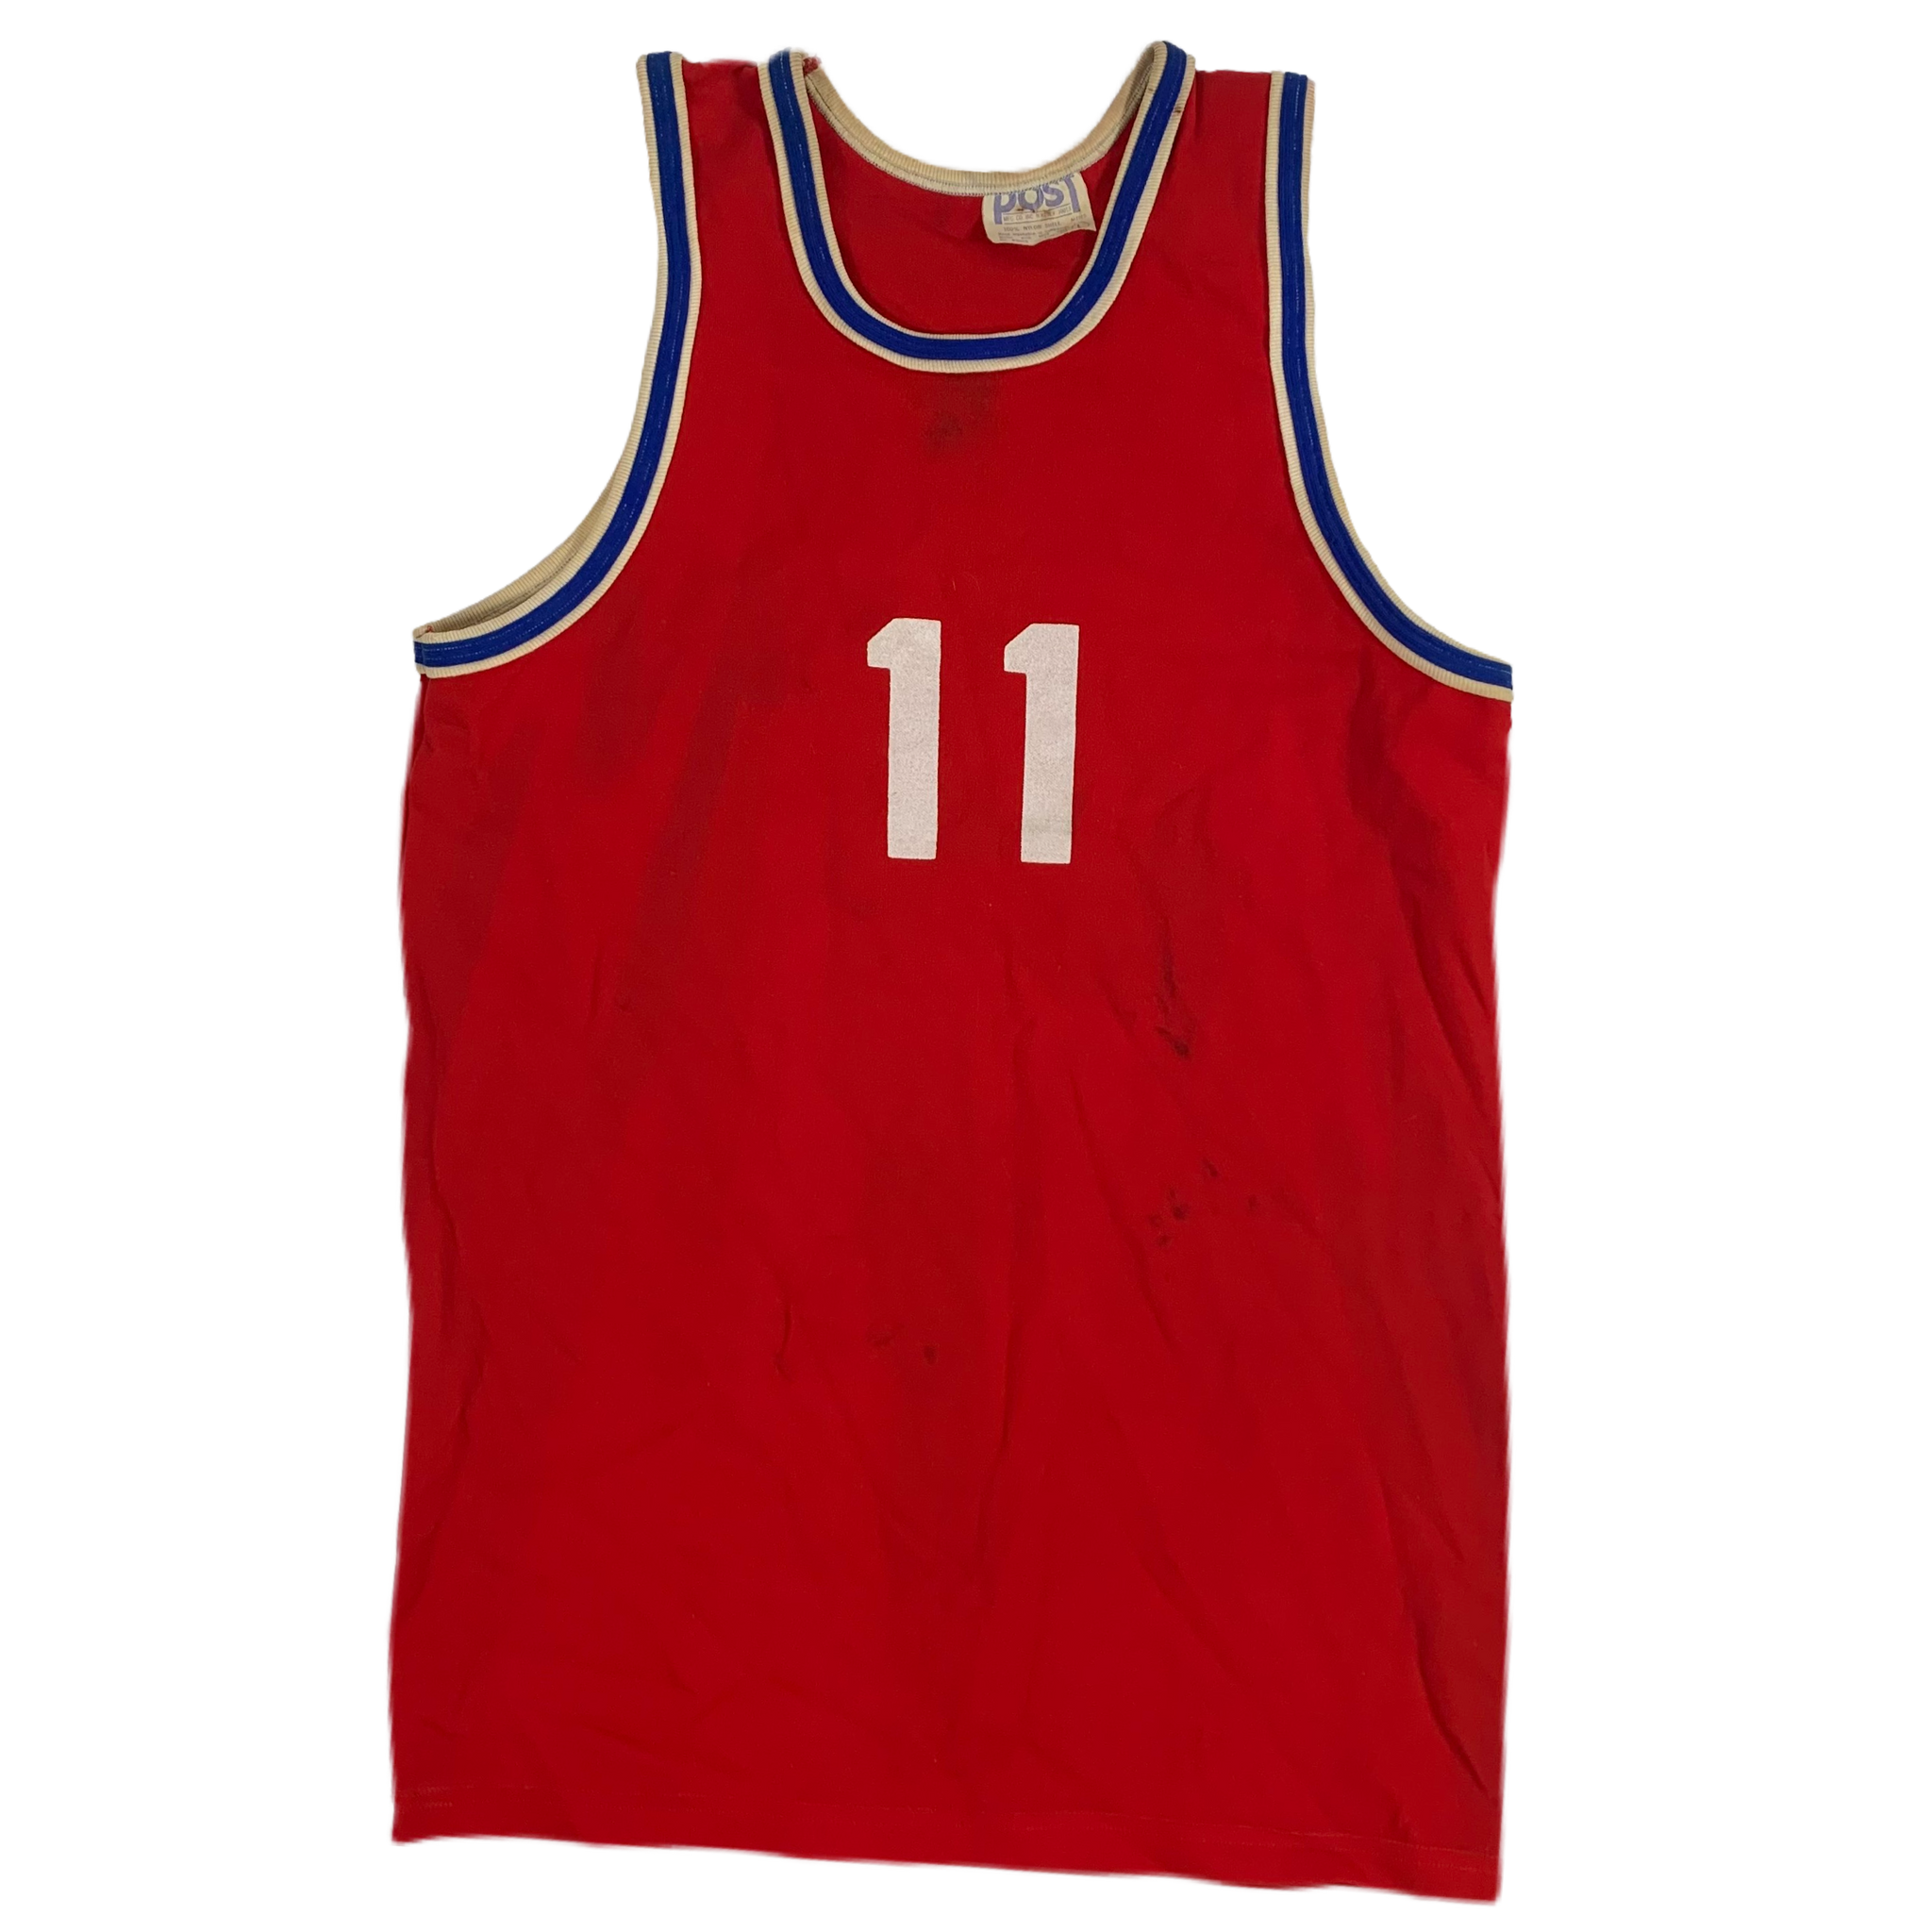 Vintage POST MFG CO. N.Y. Nylon #11 Basketball Jersey